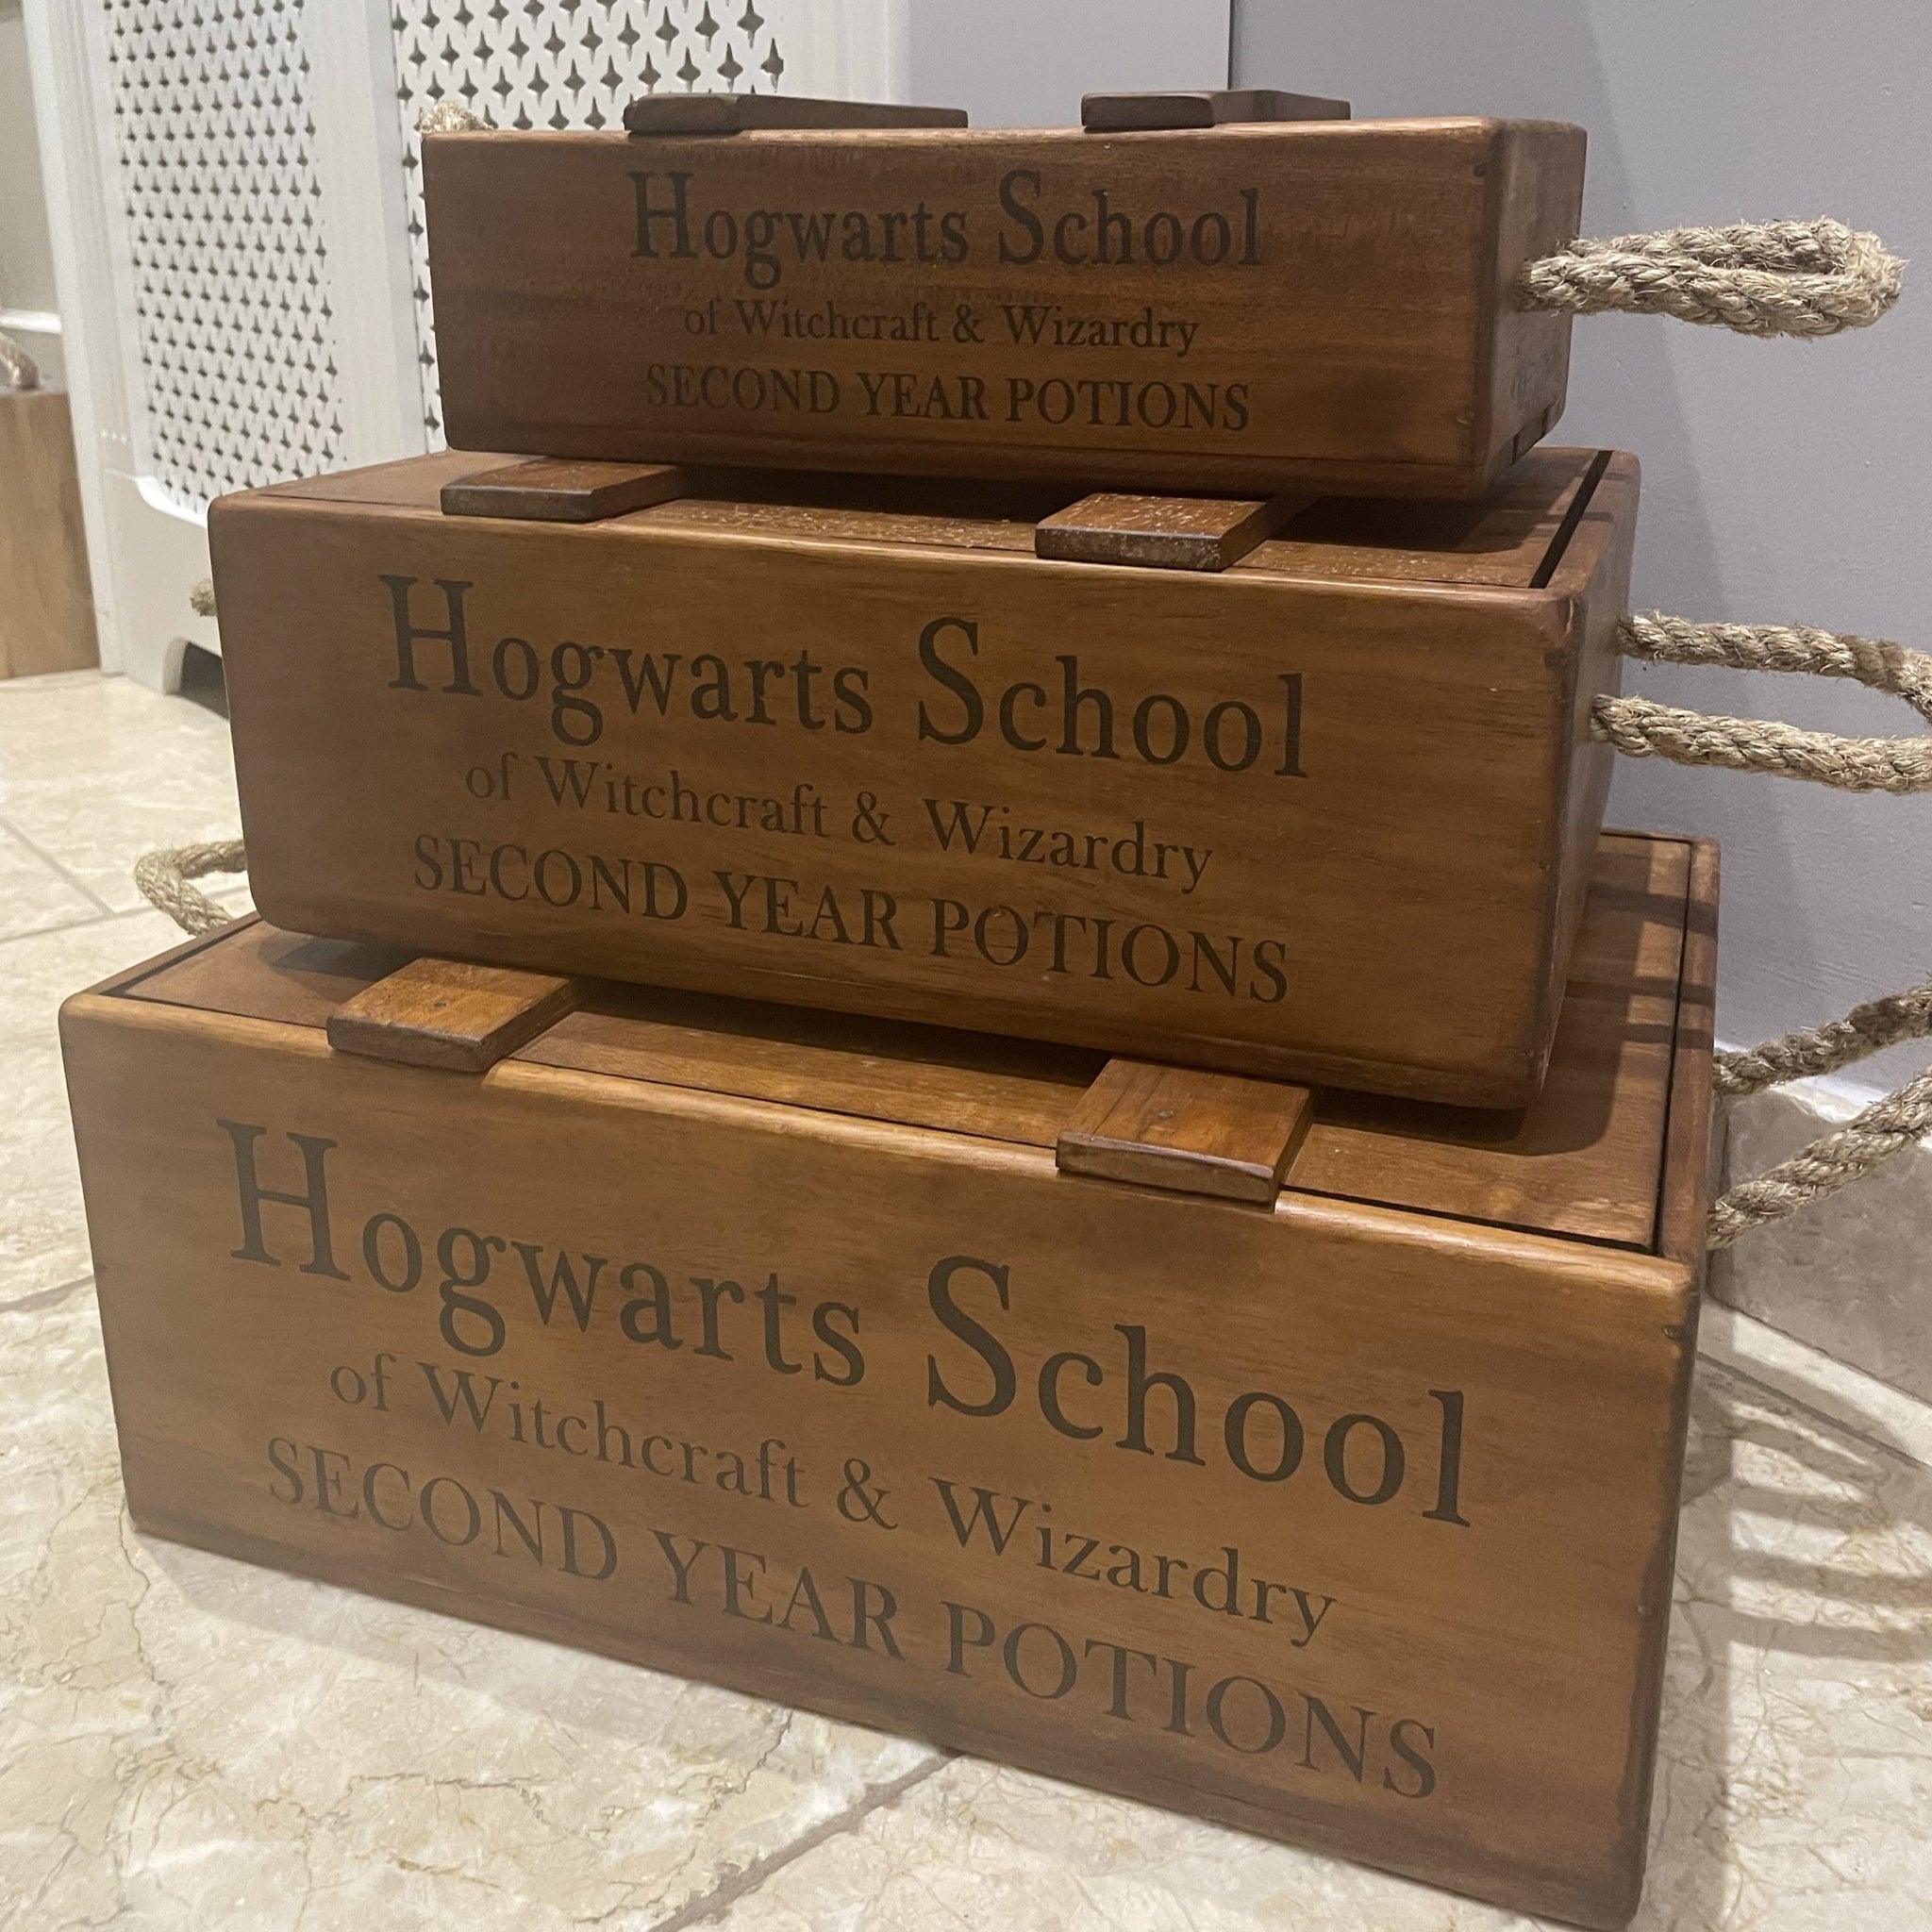 Hogwarts storage chests